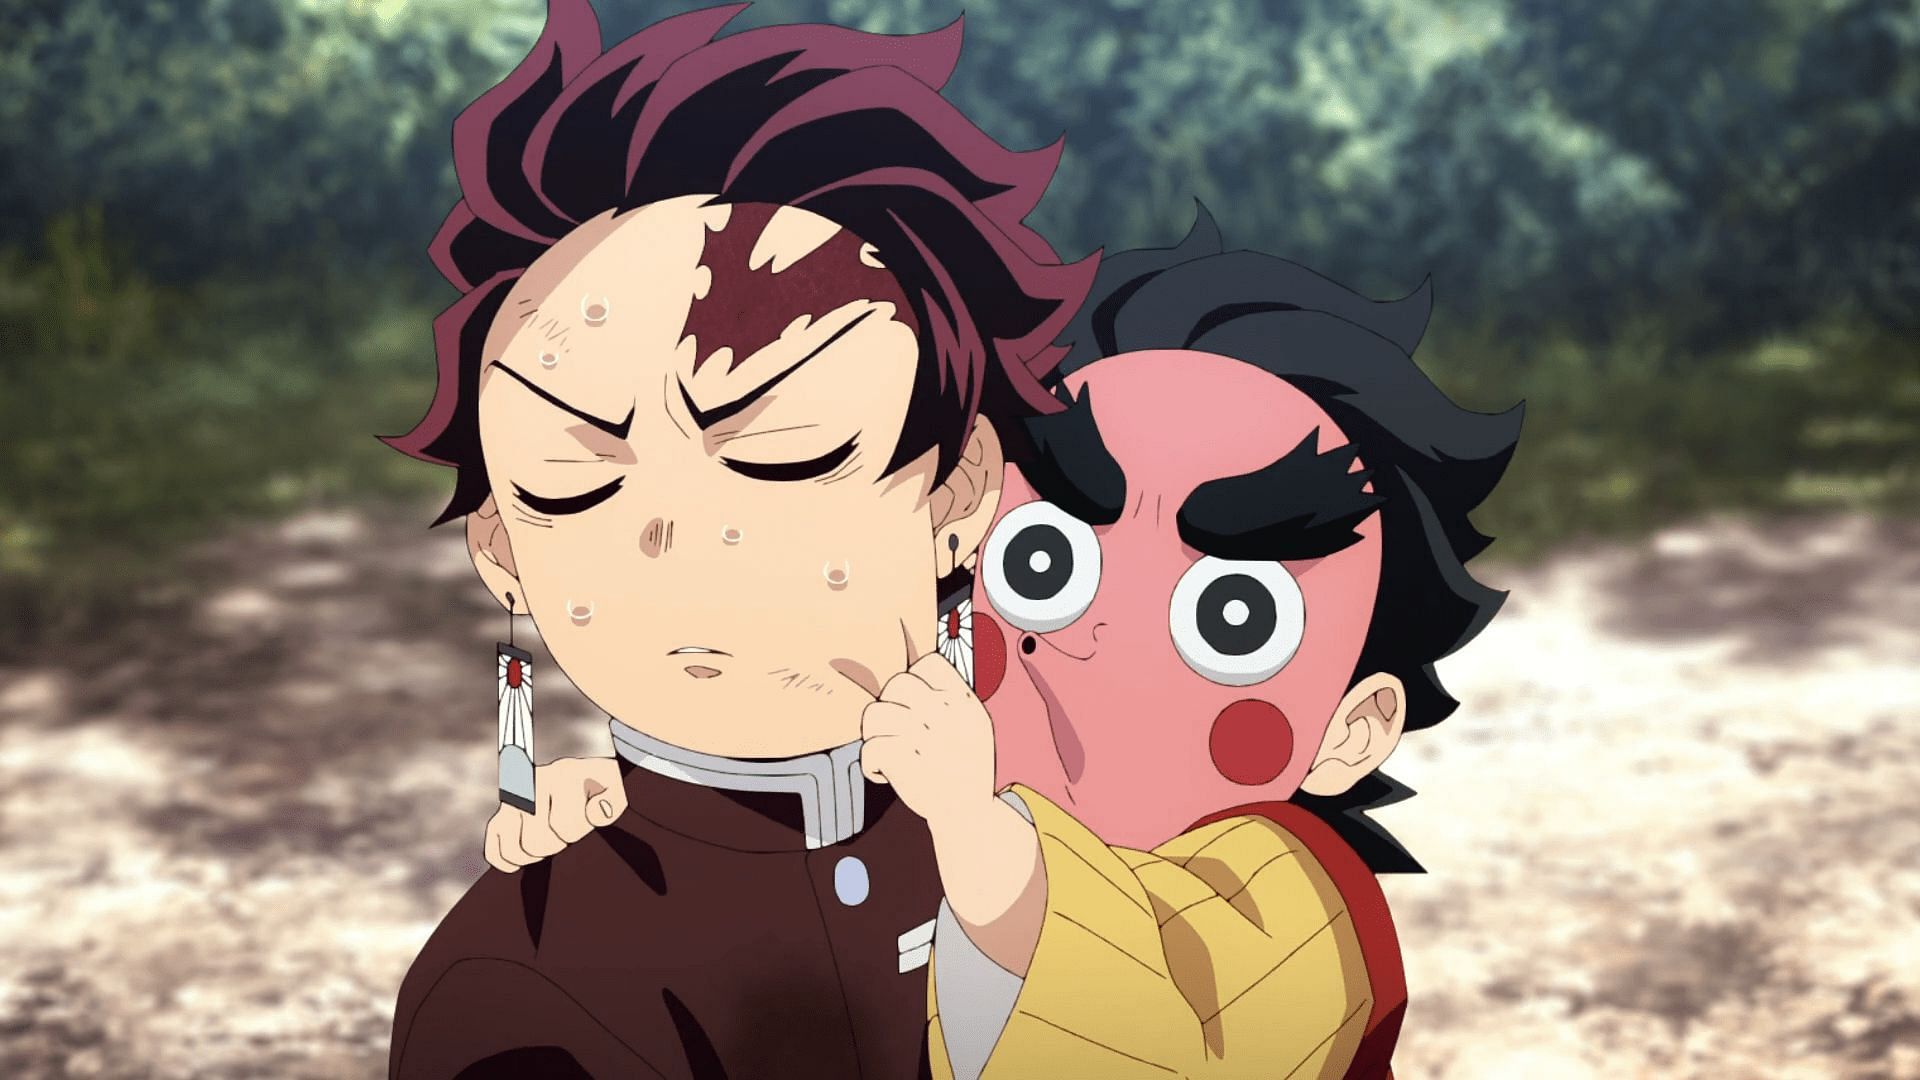 Kotetsu and Tanjiro as seen in the series (Image via Ufotable)